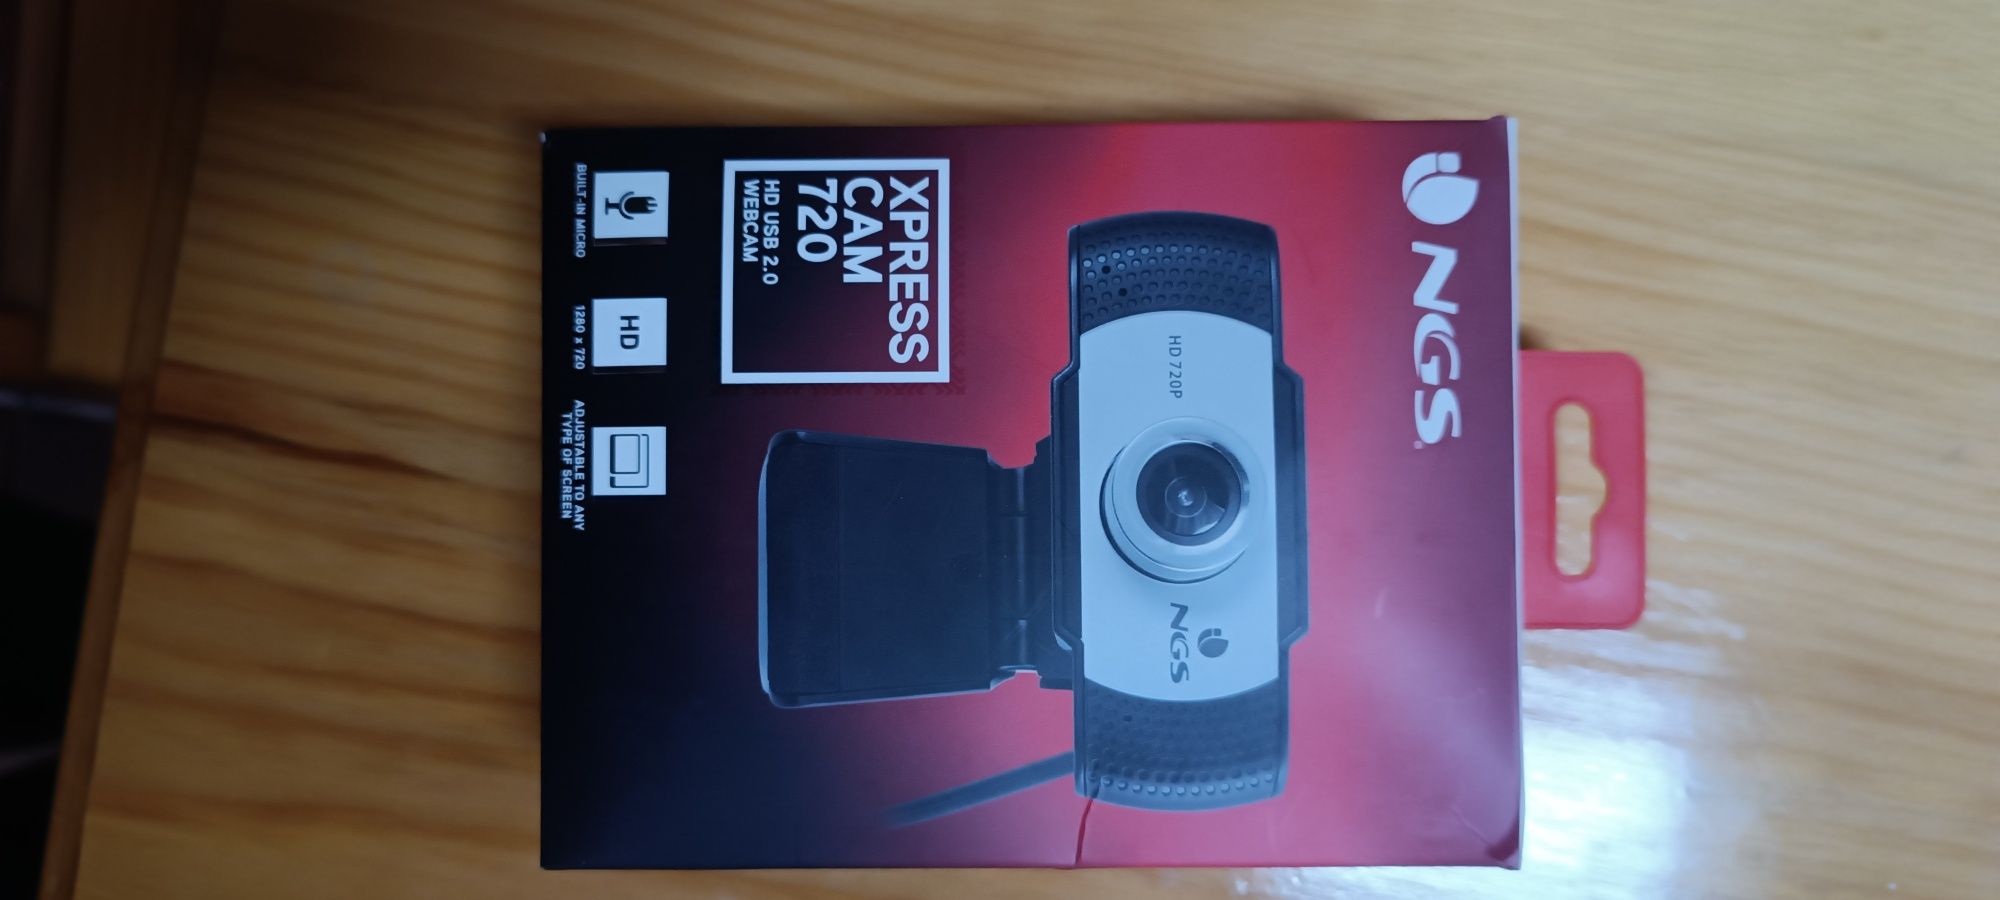 Webcam NGS XPRESS 720 HD